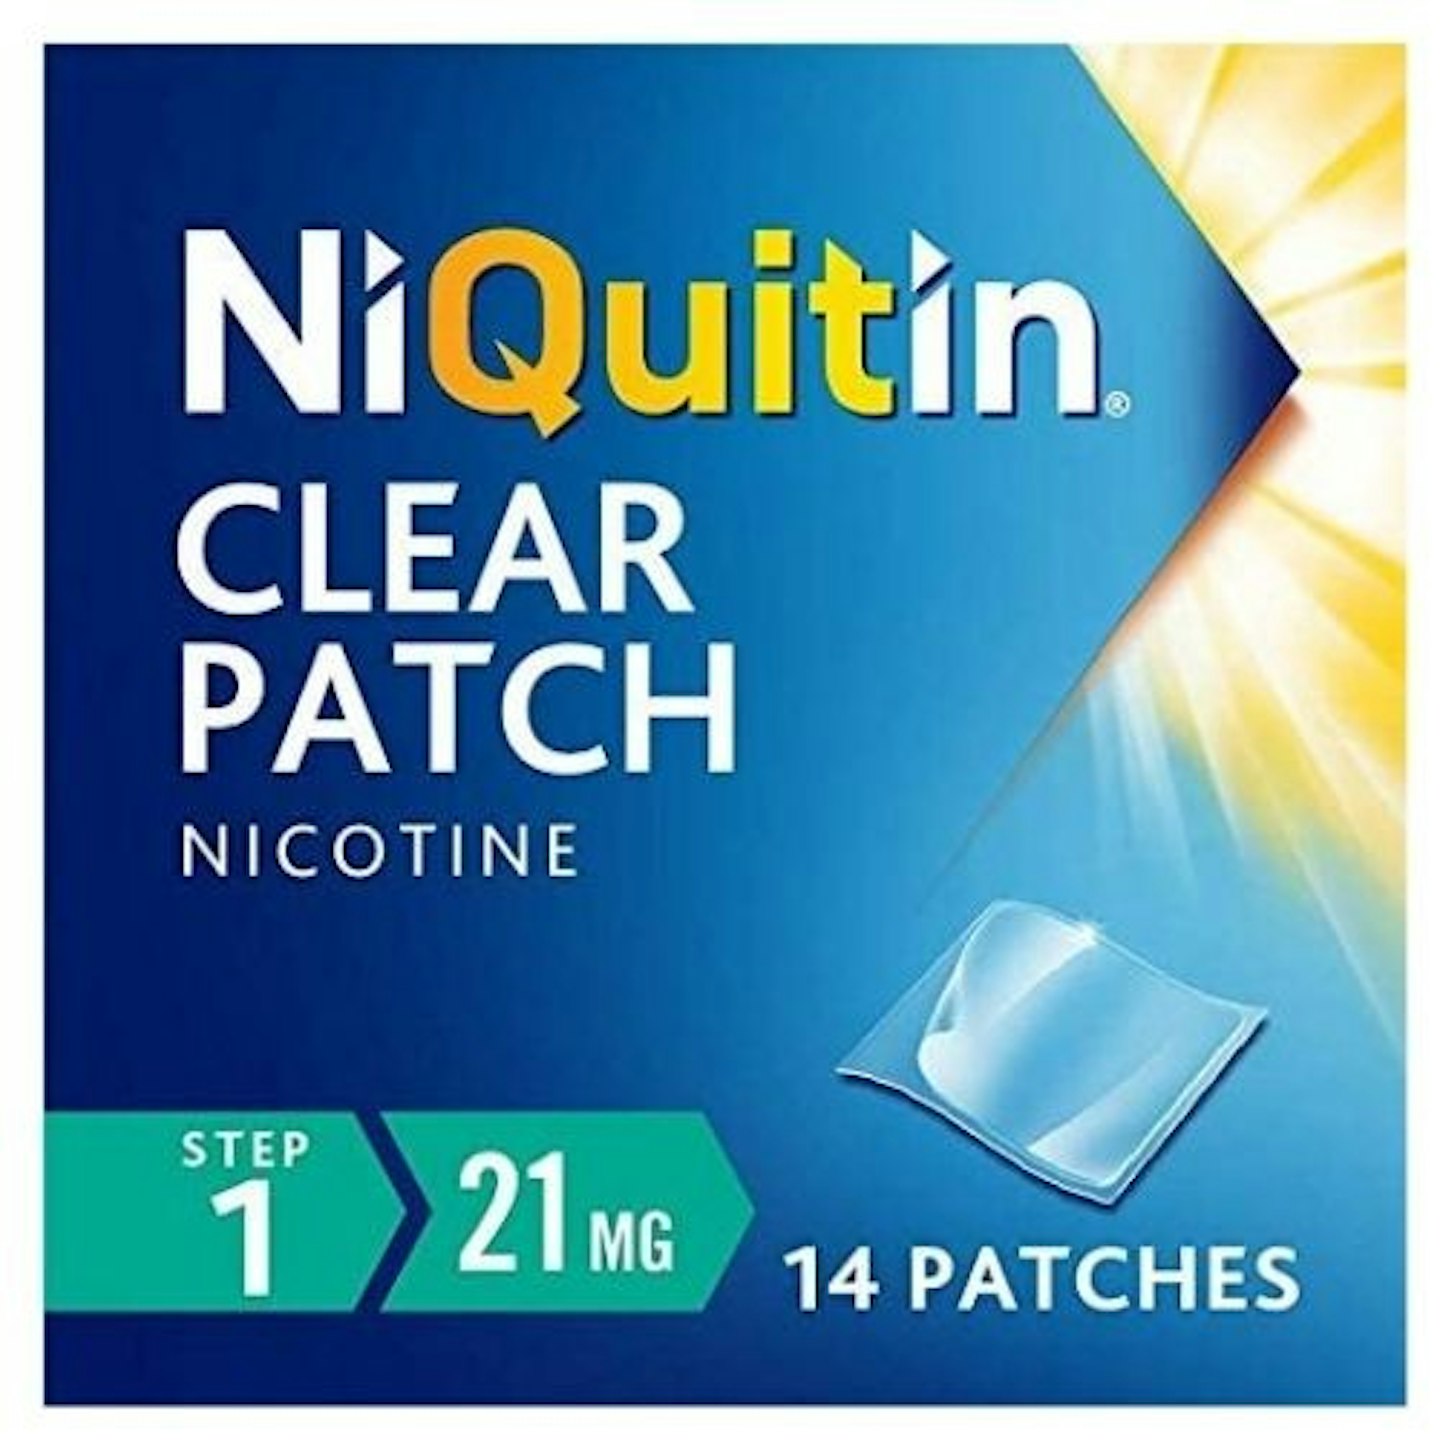 NiQuitIn Nicotine Patches